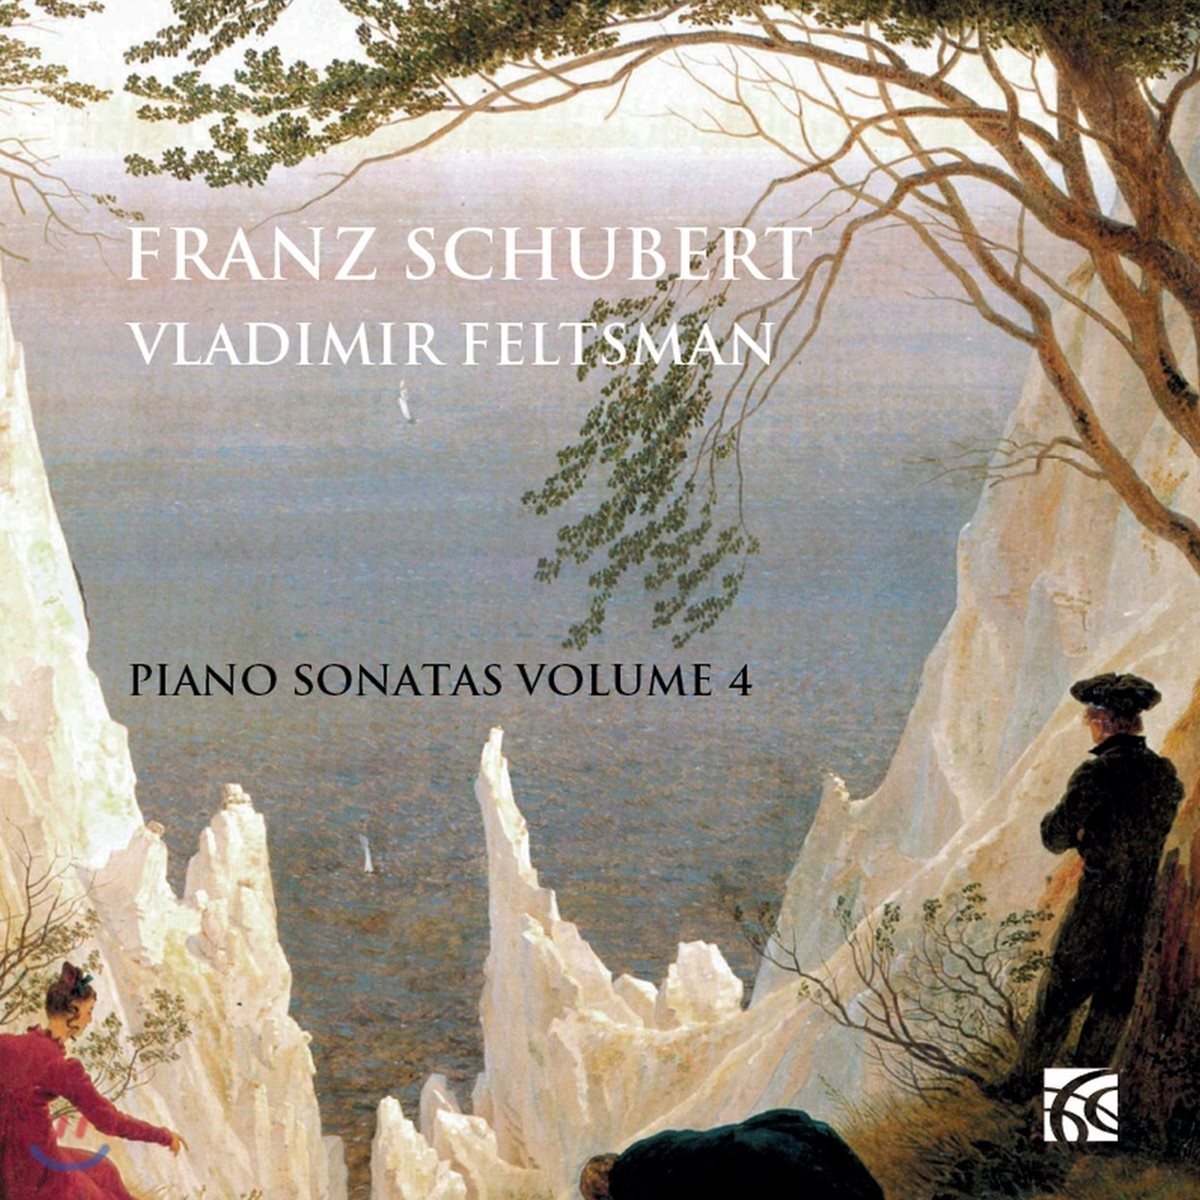 Vladimir Feltsman 슈베르트: 피아노 작품 4집 - 소나타 D.784 & D.959 (Schubert: Piano Music Vol. 4 - Sonatas) 블라디미르 펠츠만